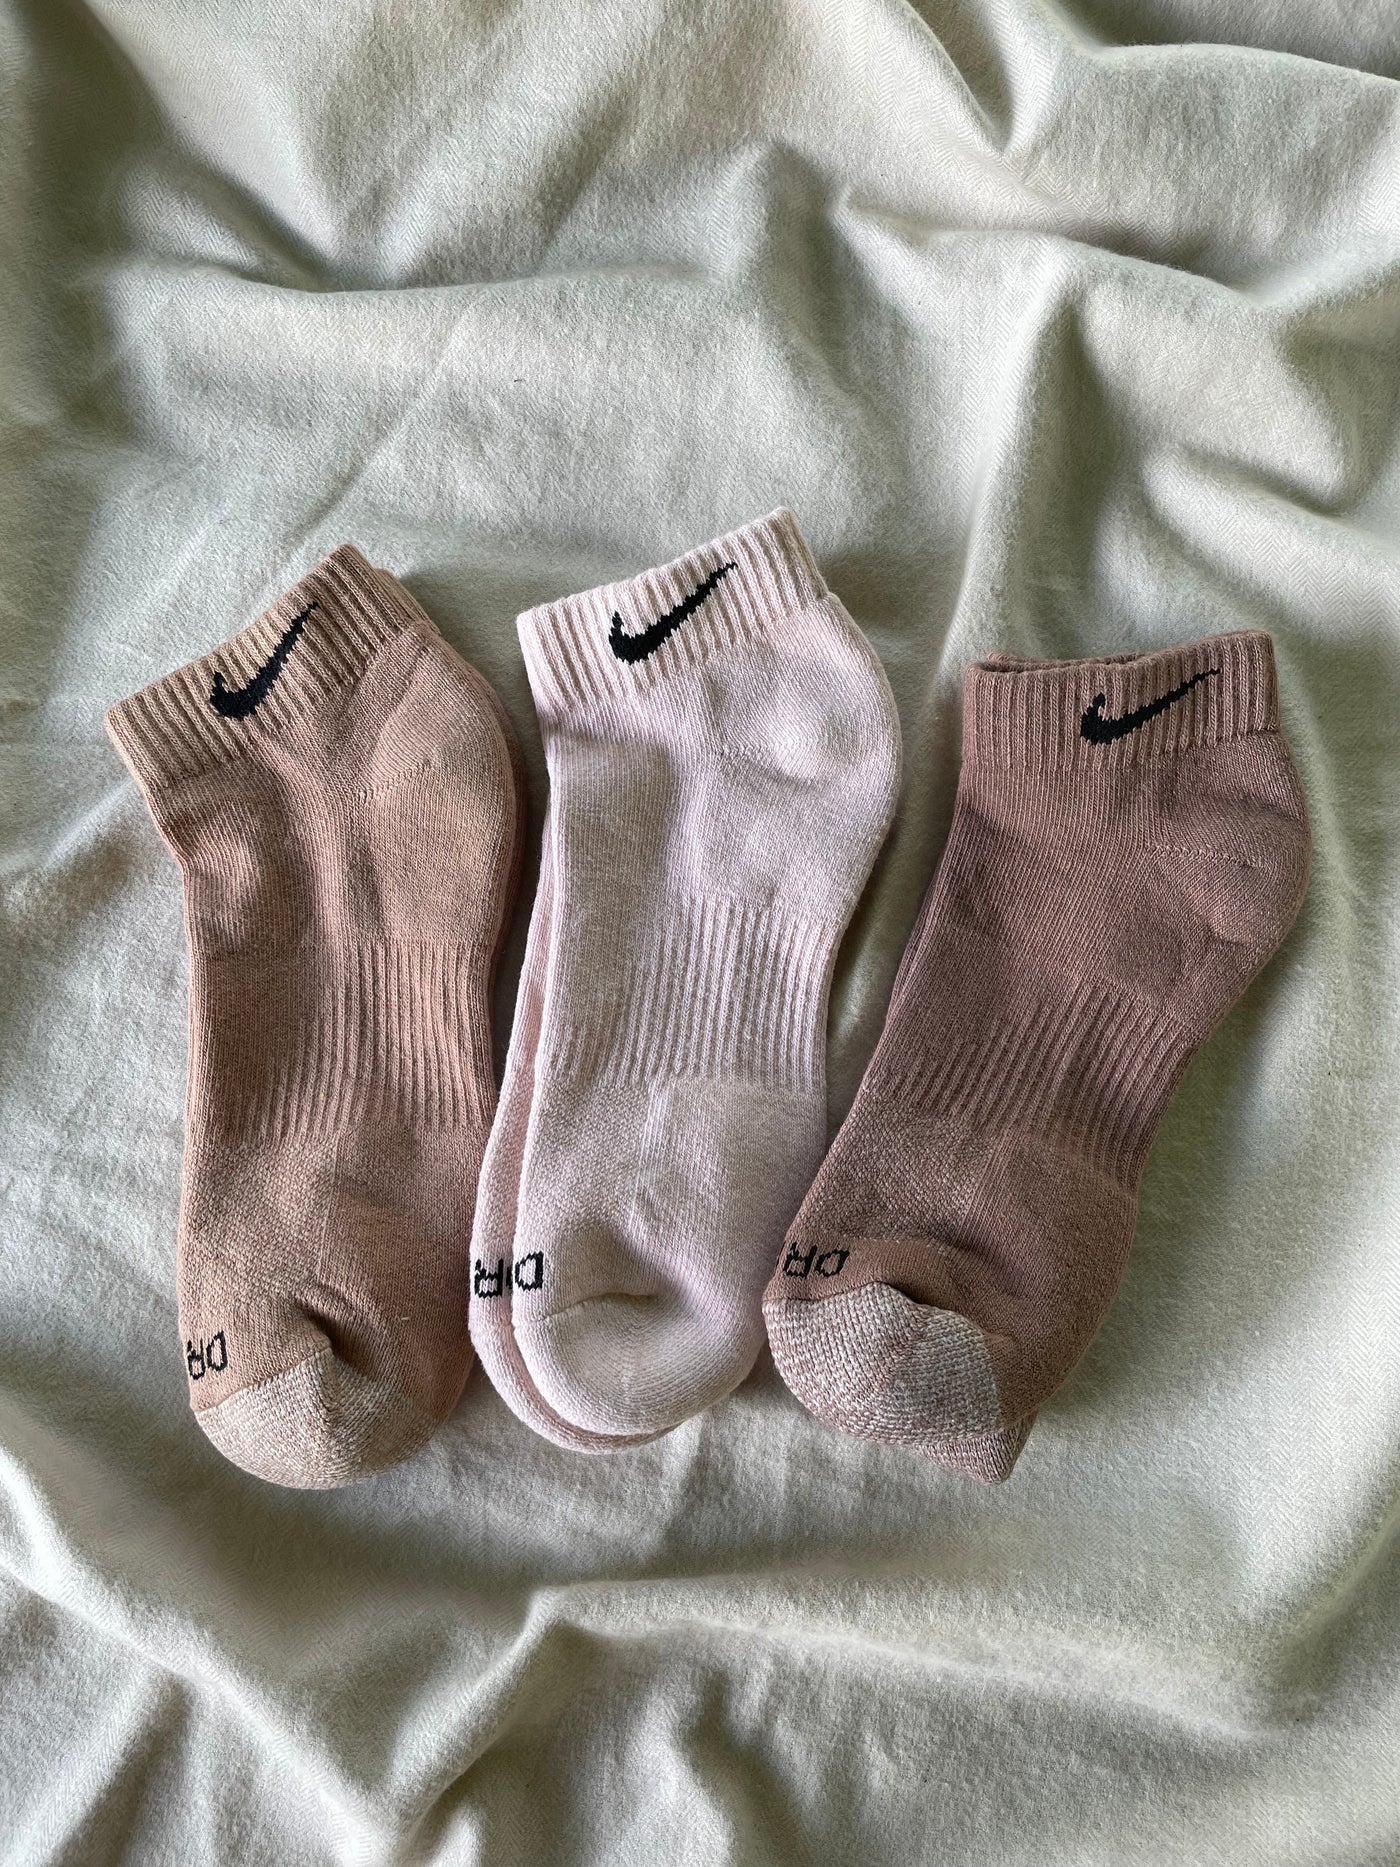 Nike Ankle Socks